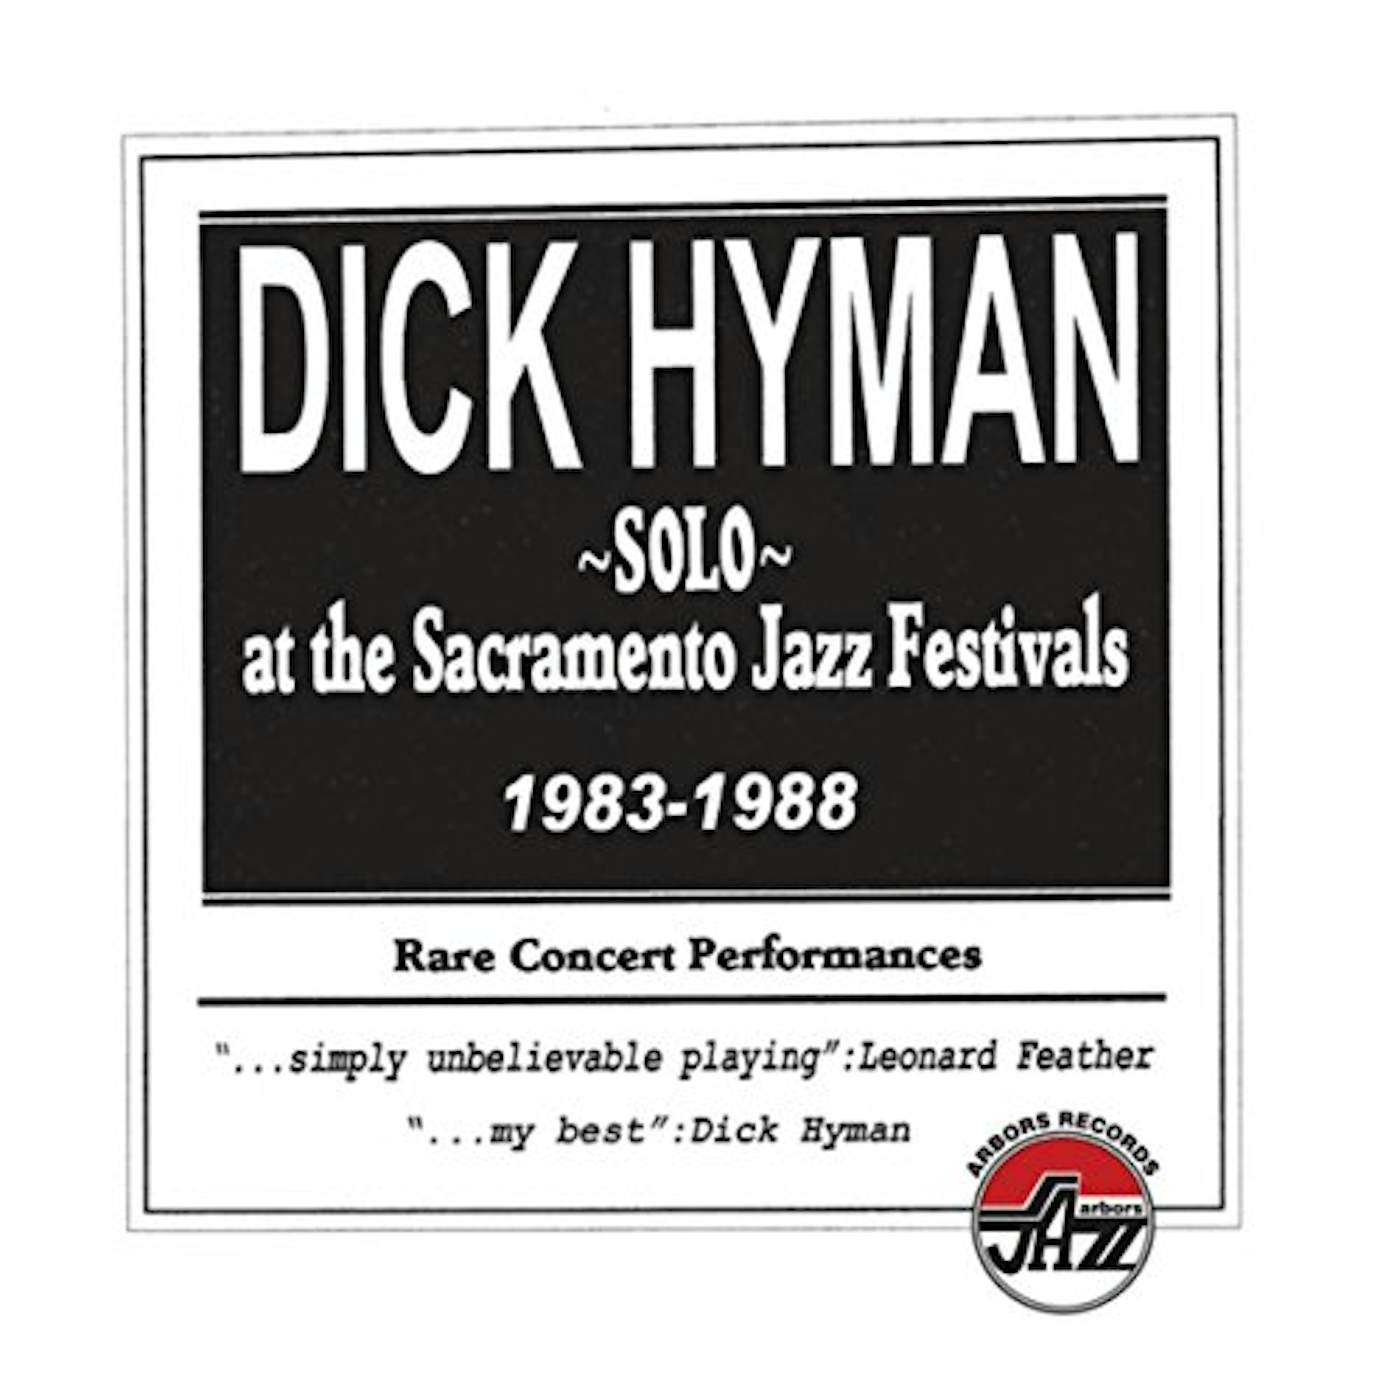 Dick Hyman SOLO AT THE SACRAMENTO JAZZ FESTIVALS 1983-1988 CD